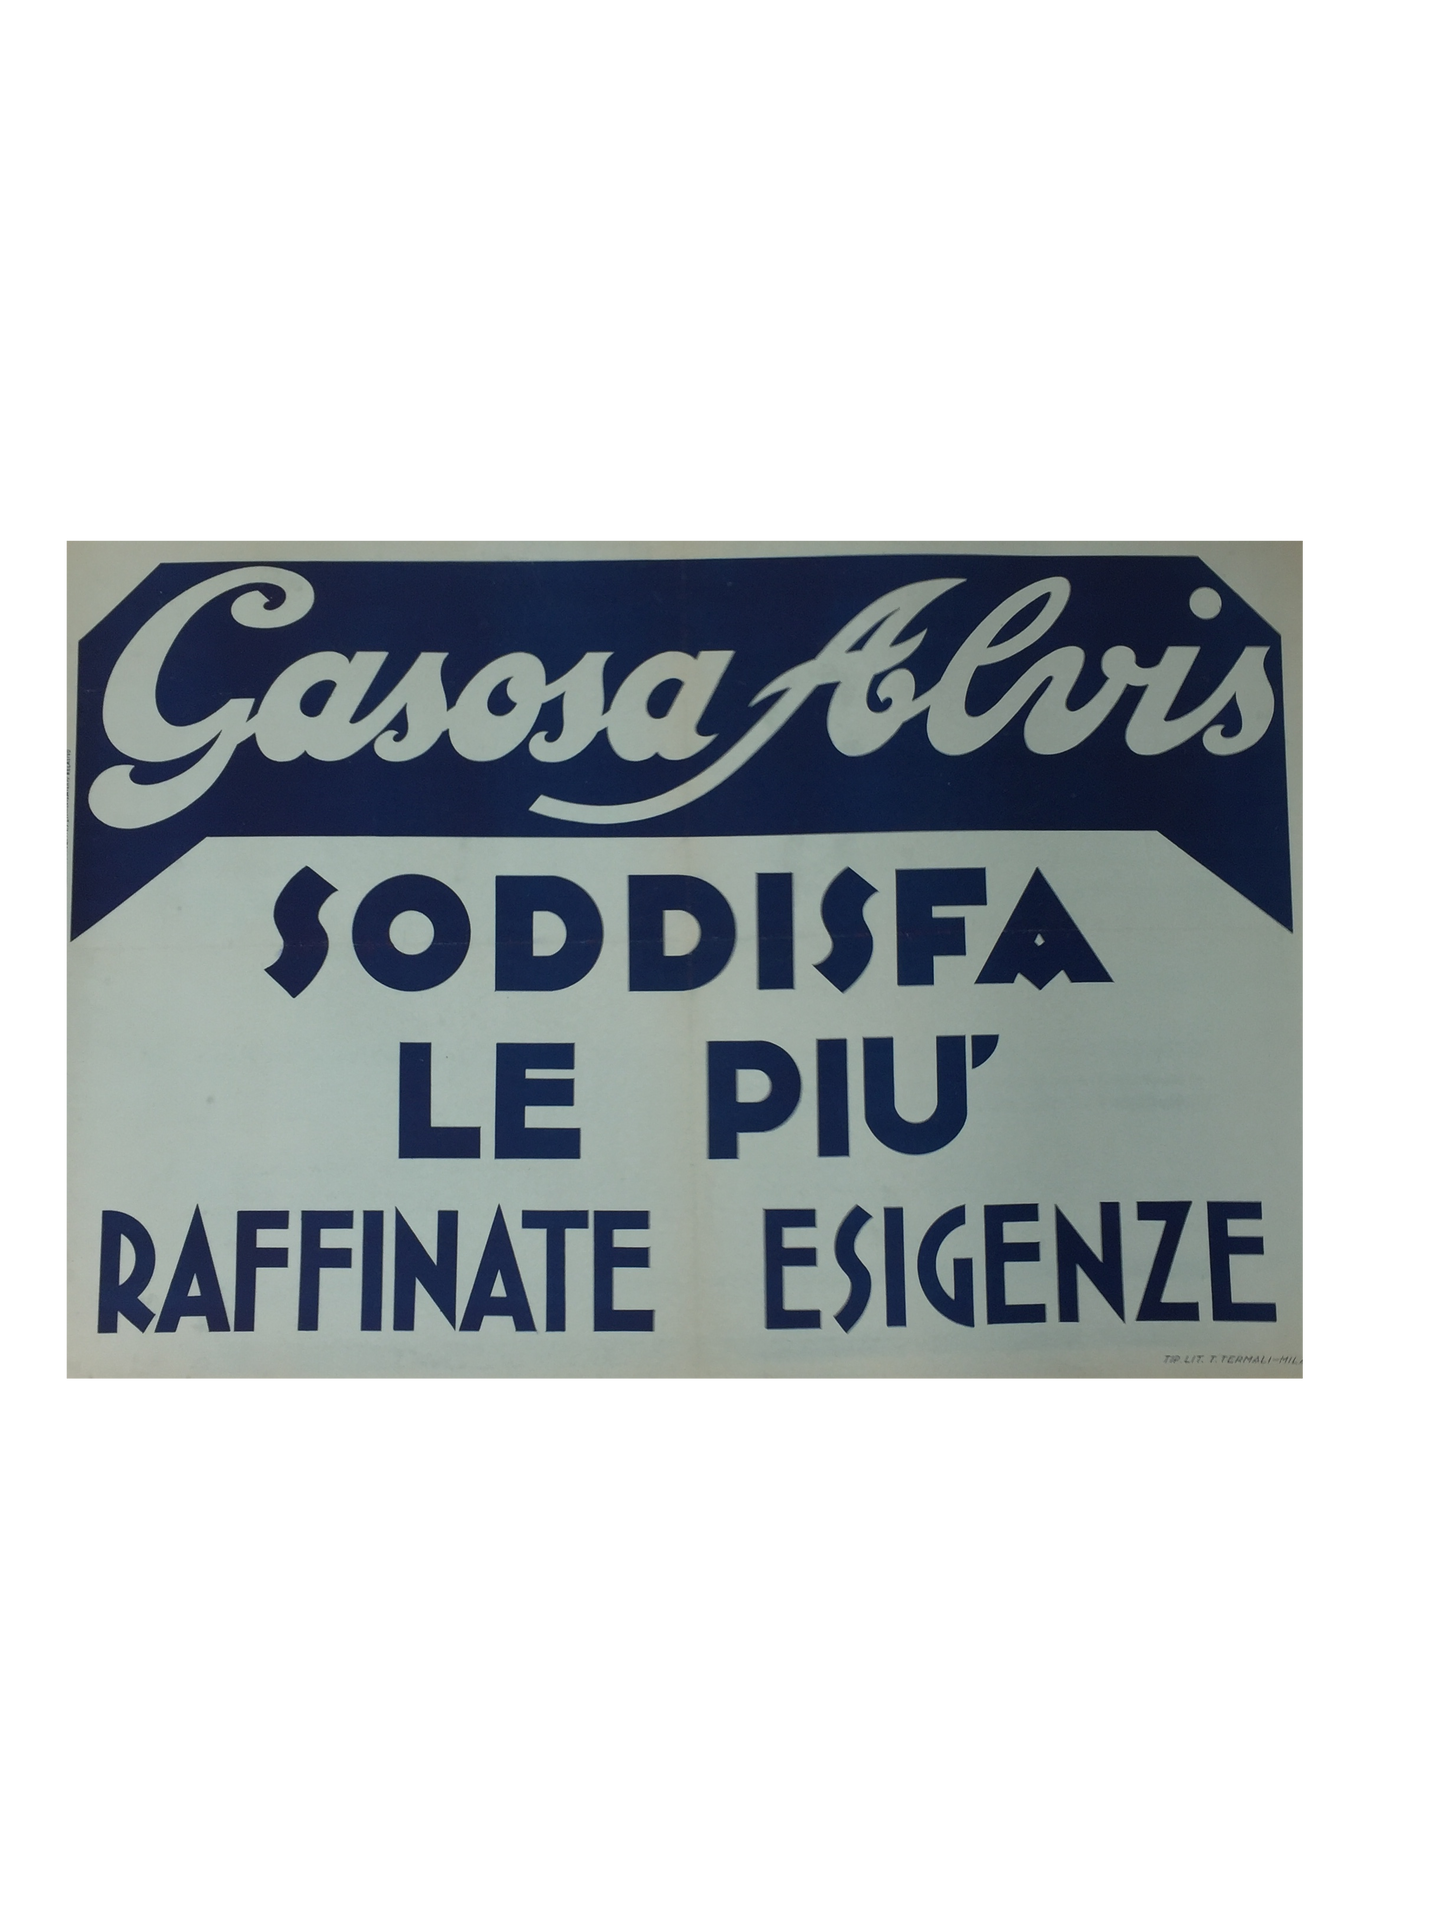 'Gasosa Alvis' Original Soda Poster (Blue)